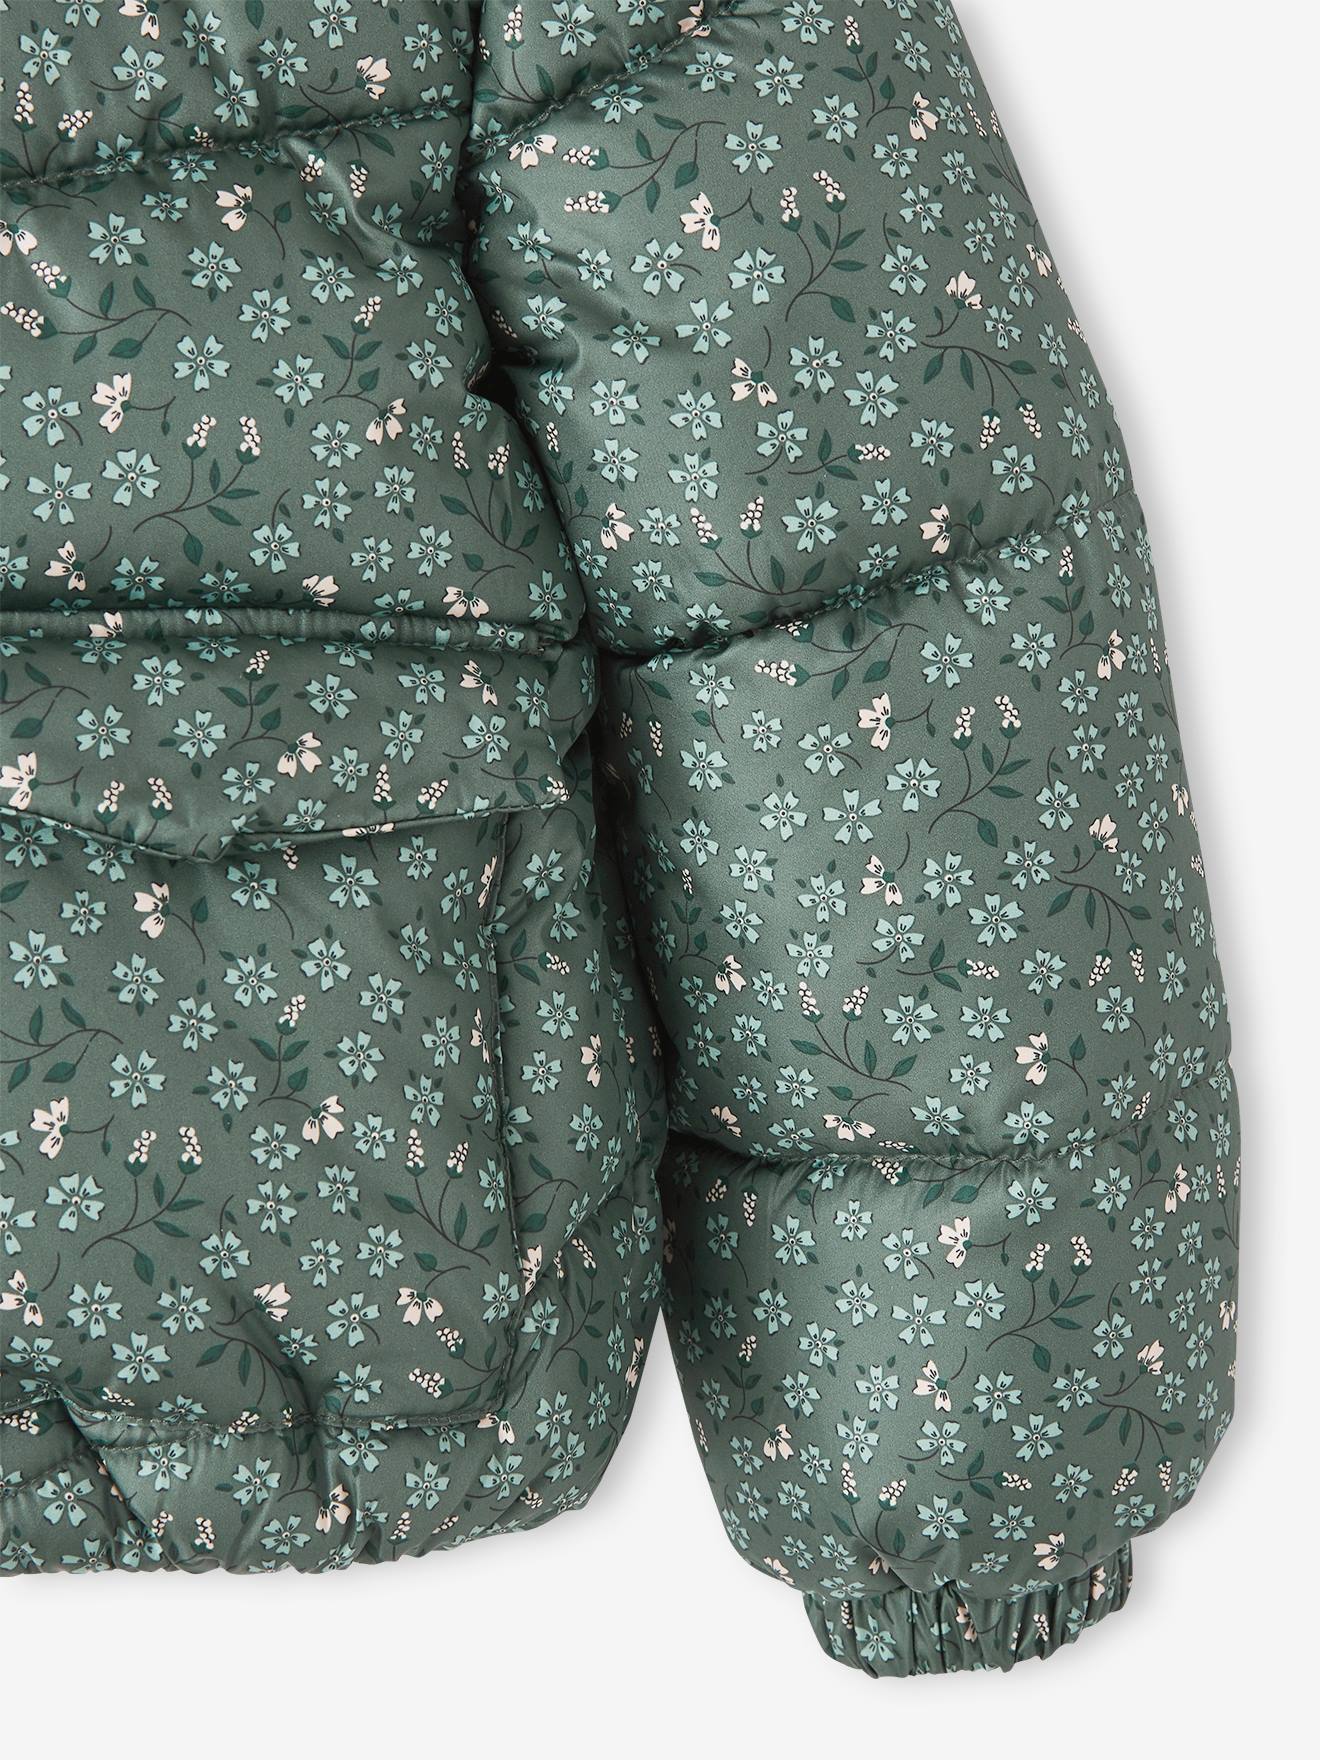 Printed Jacket with Hood & Polar Fleece Lining for Girls - printed green,  Girls